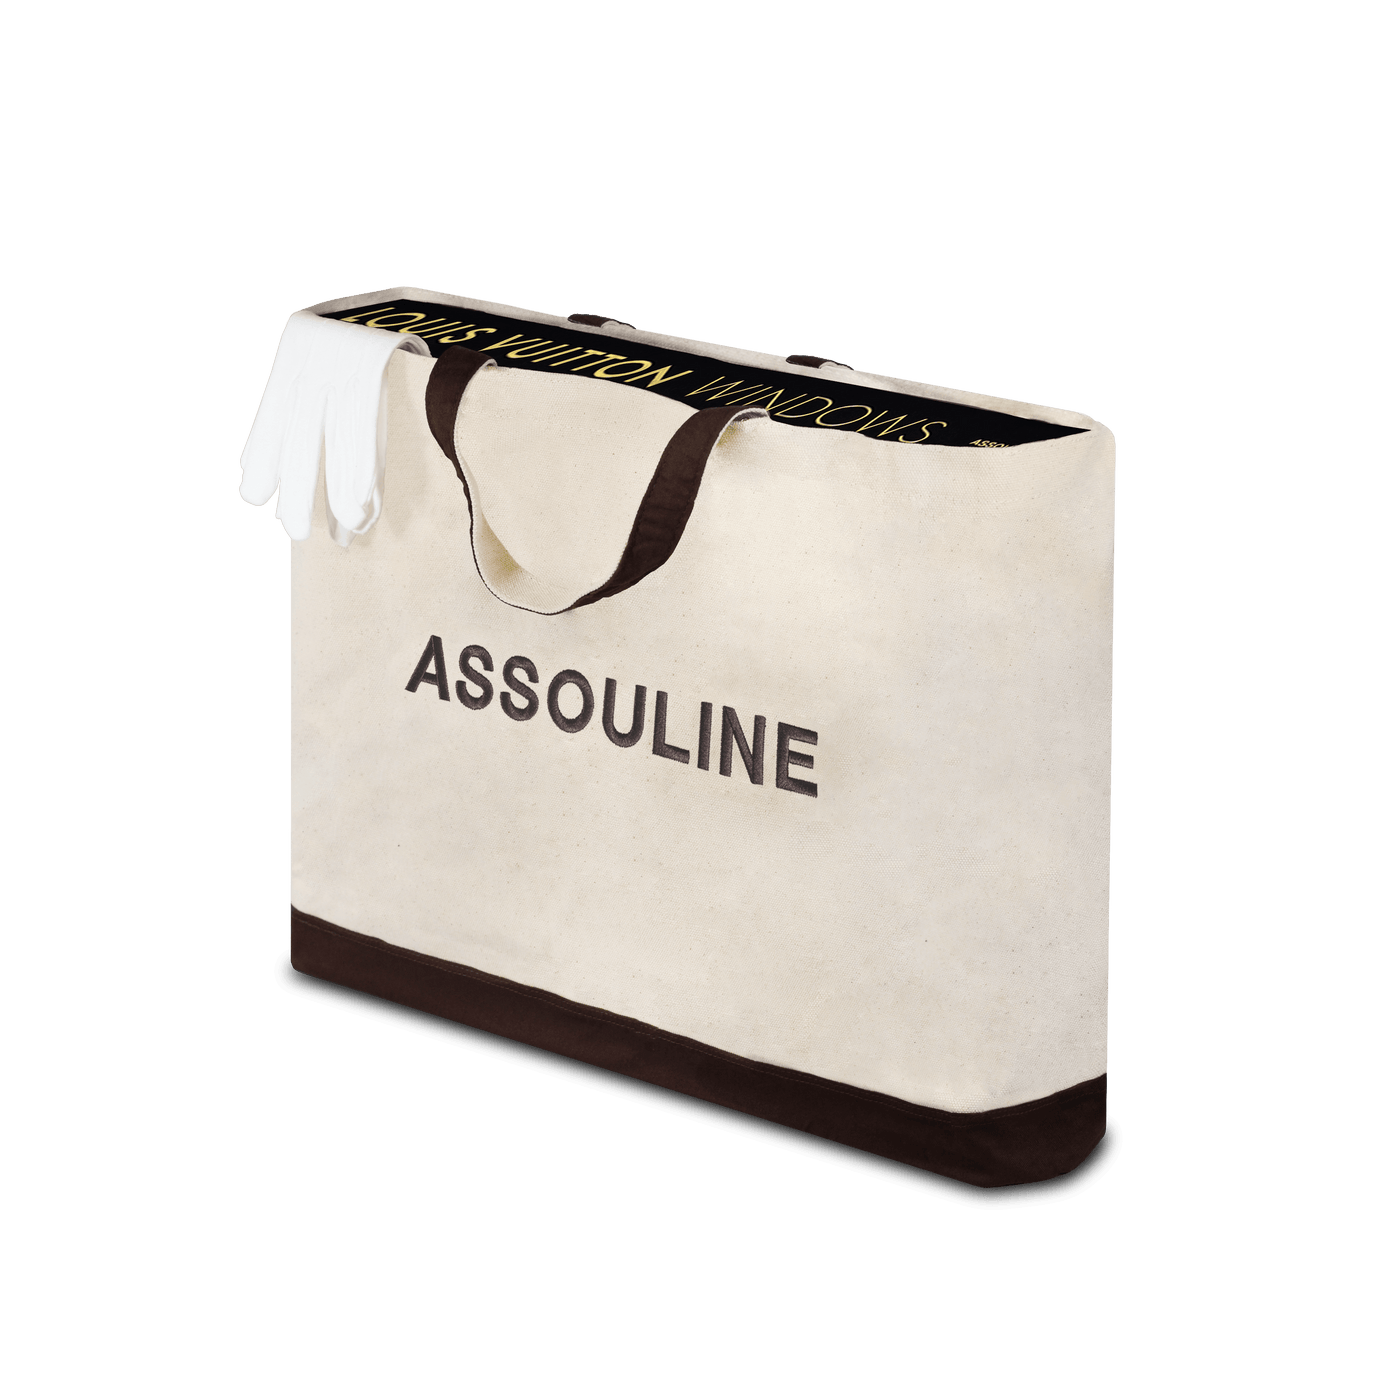 Louis Vuitton Windows - Assouline – SipHipHooray